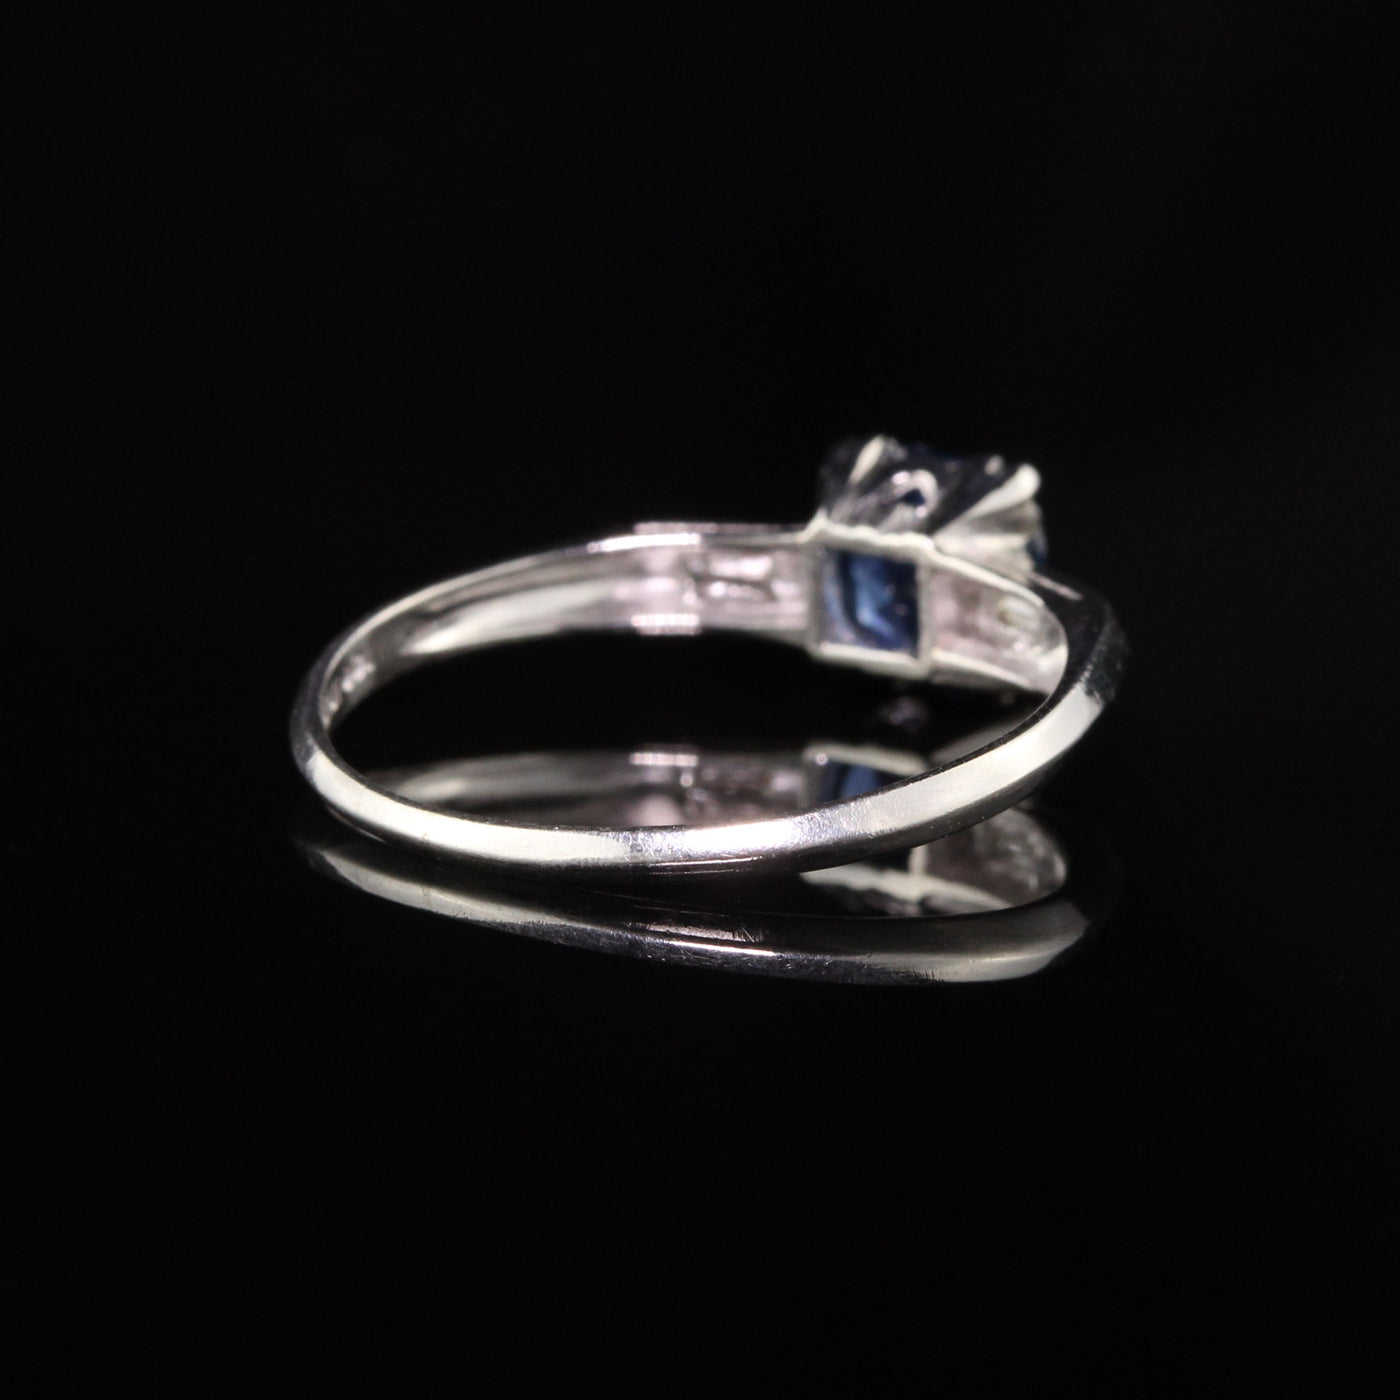 Antique Art Deco Platinum Sapphire and Diamond Engagement Ring - Layaway 4 of 4